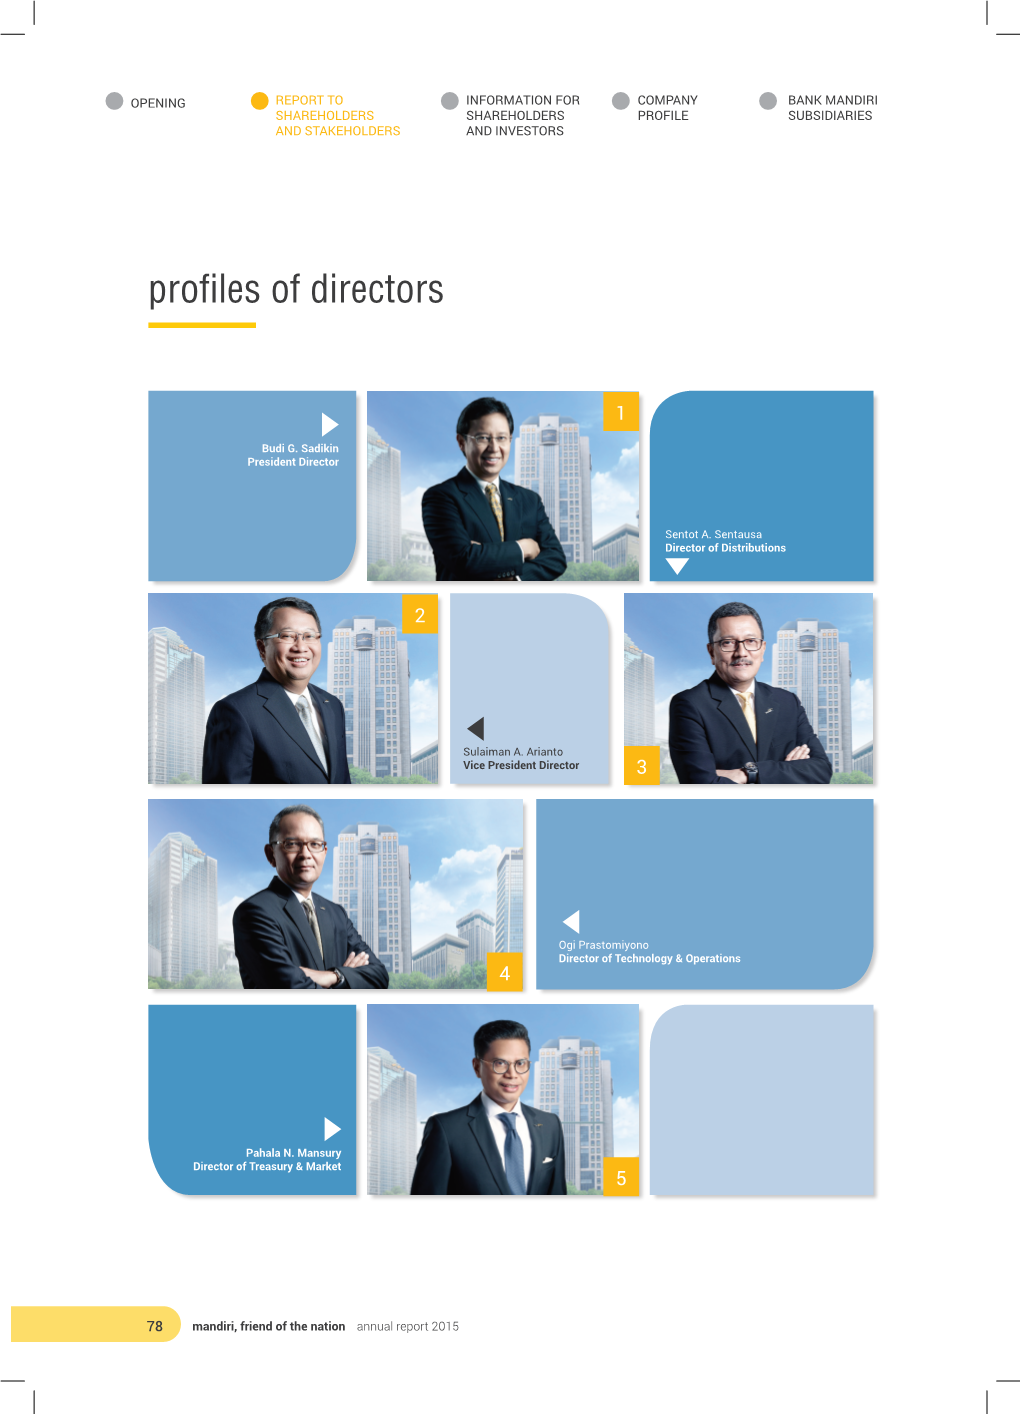 Profiles of Directors